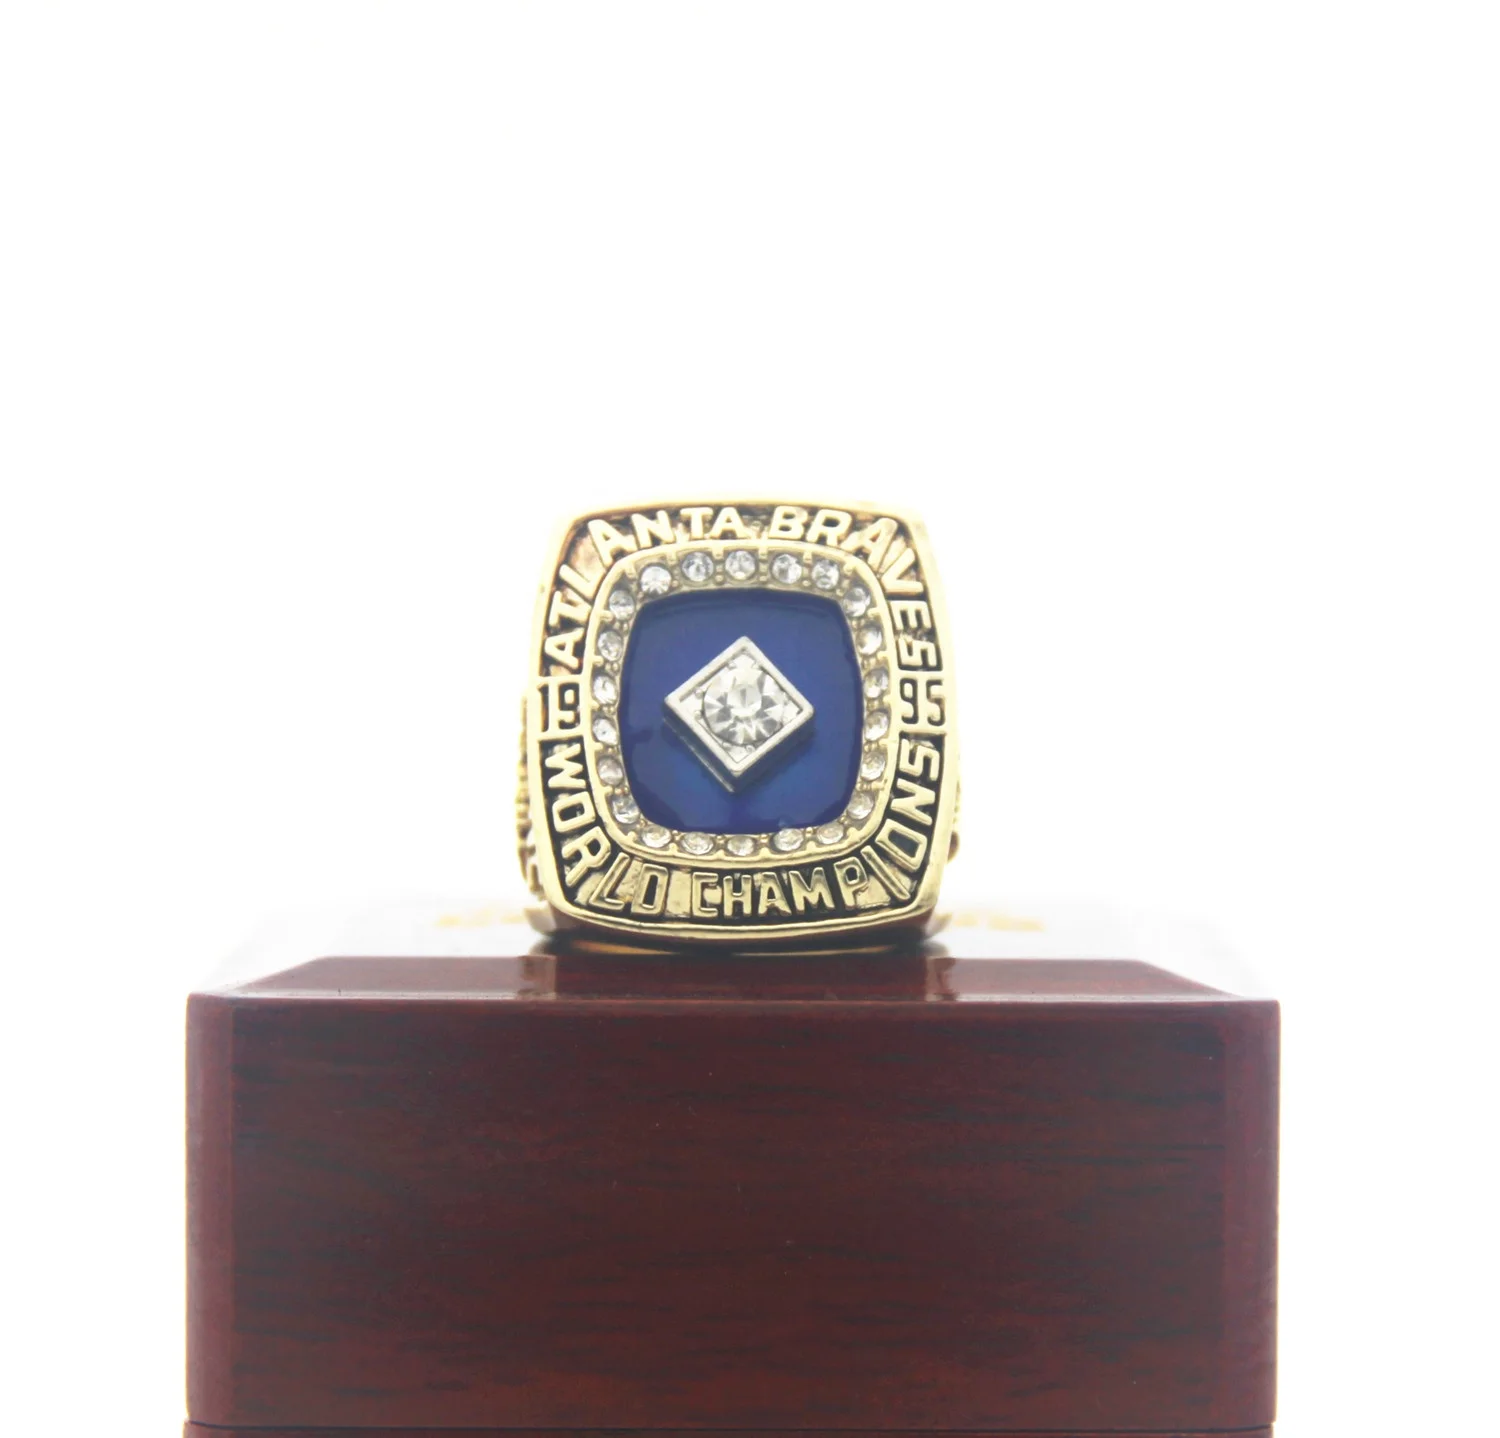 

Linghu Custom Youth League Champion Ring Major League Baseball Championship Rings Display Gift Box 1995 MLB Atlanta Braves Ring, Picture shows